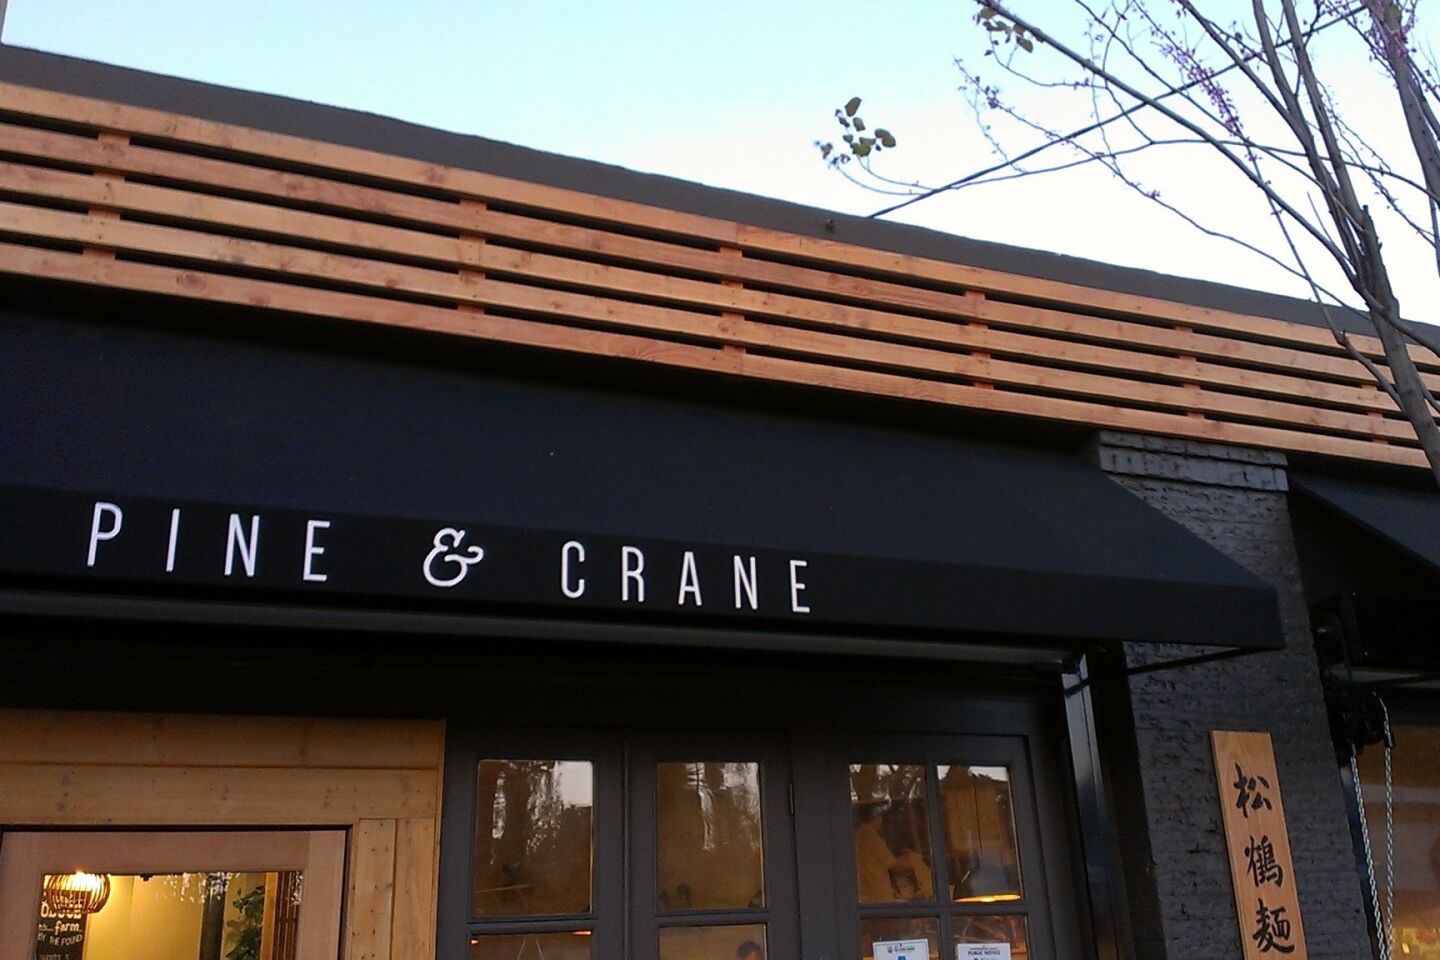 Pine & Crane